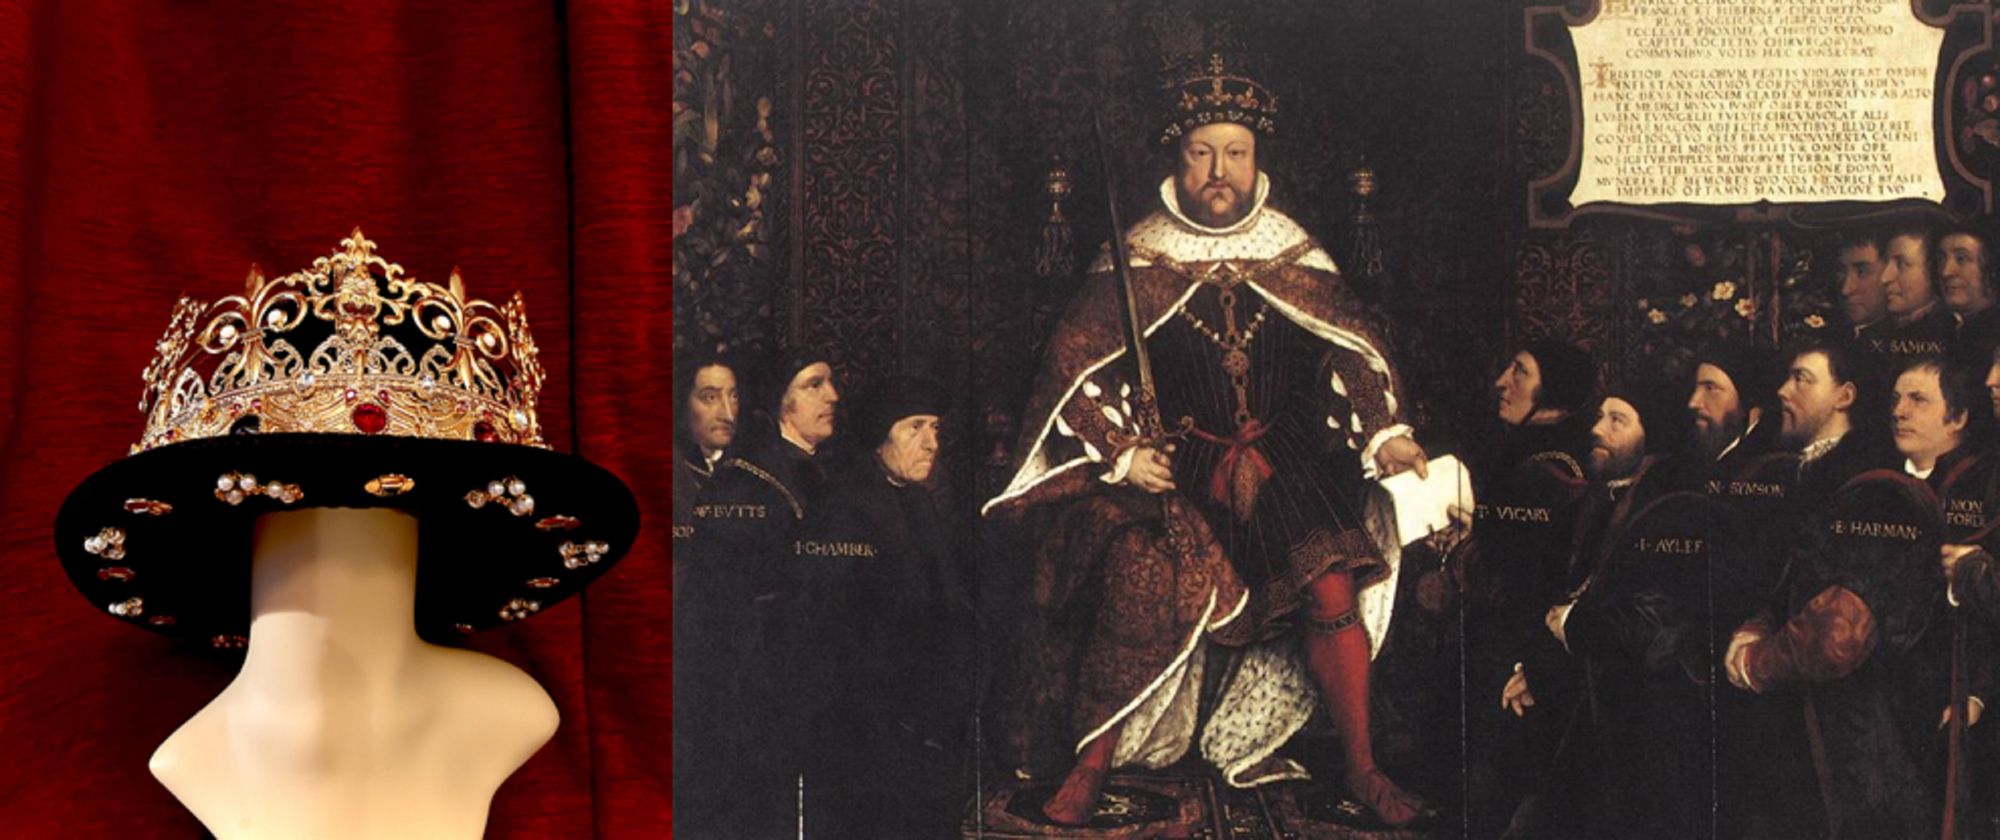 Henry VIII hat crown compare2.jpg